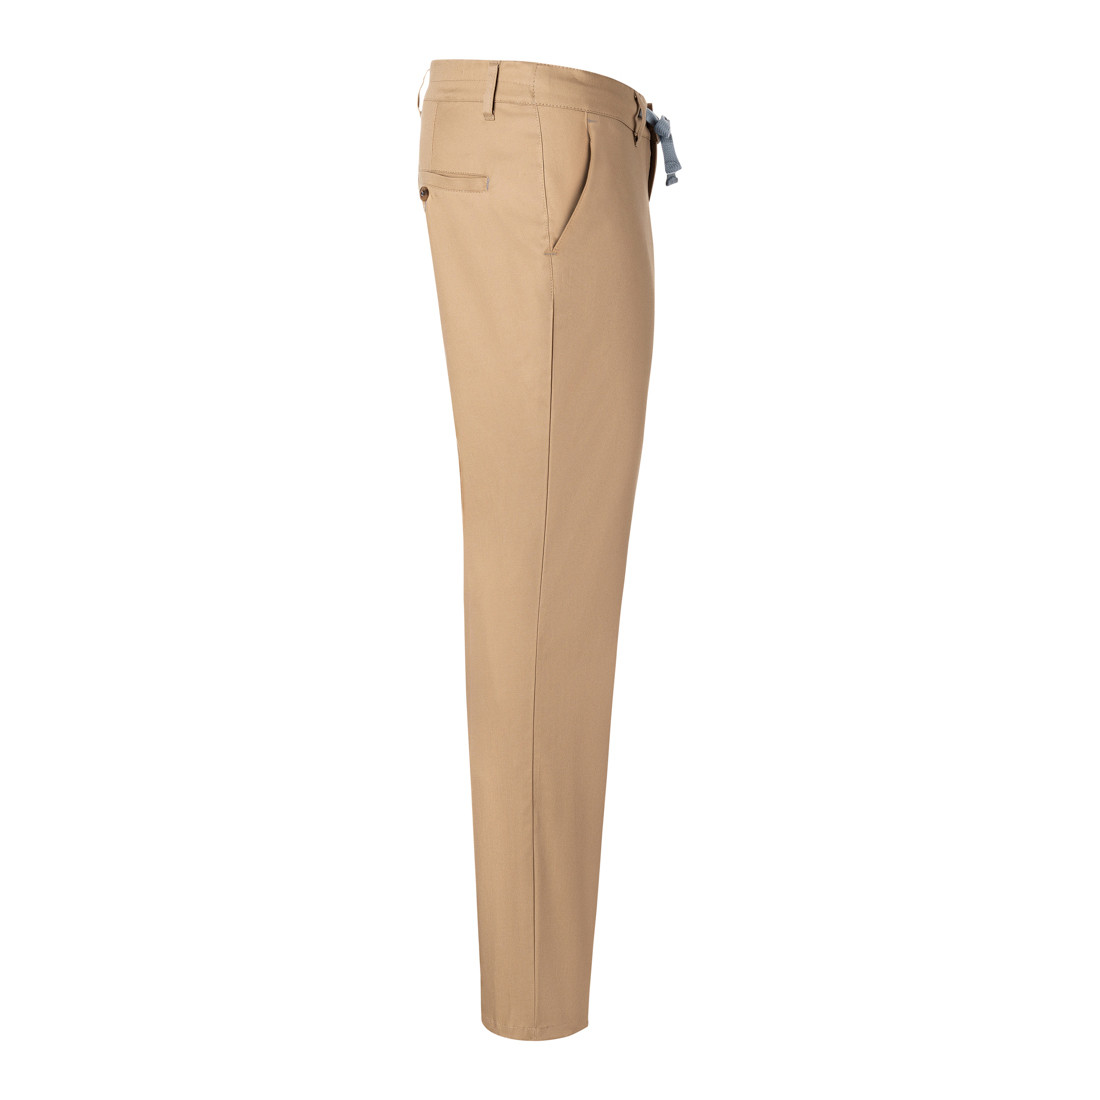 Pantaloni Chino Modern-Stretch, pentru barbati - Imbracaminte de protectie